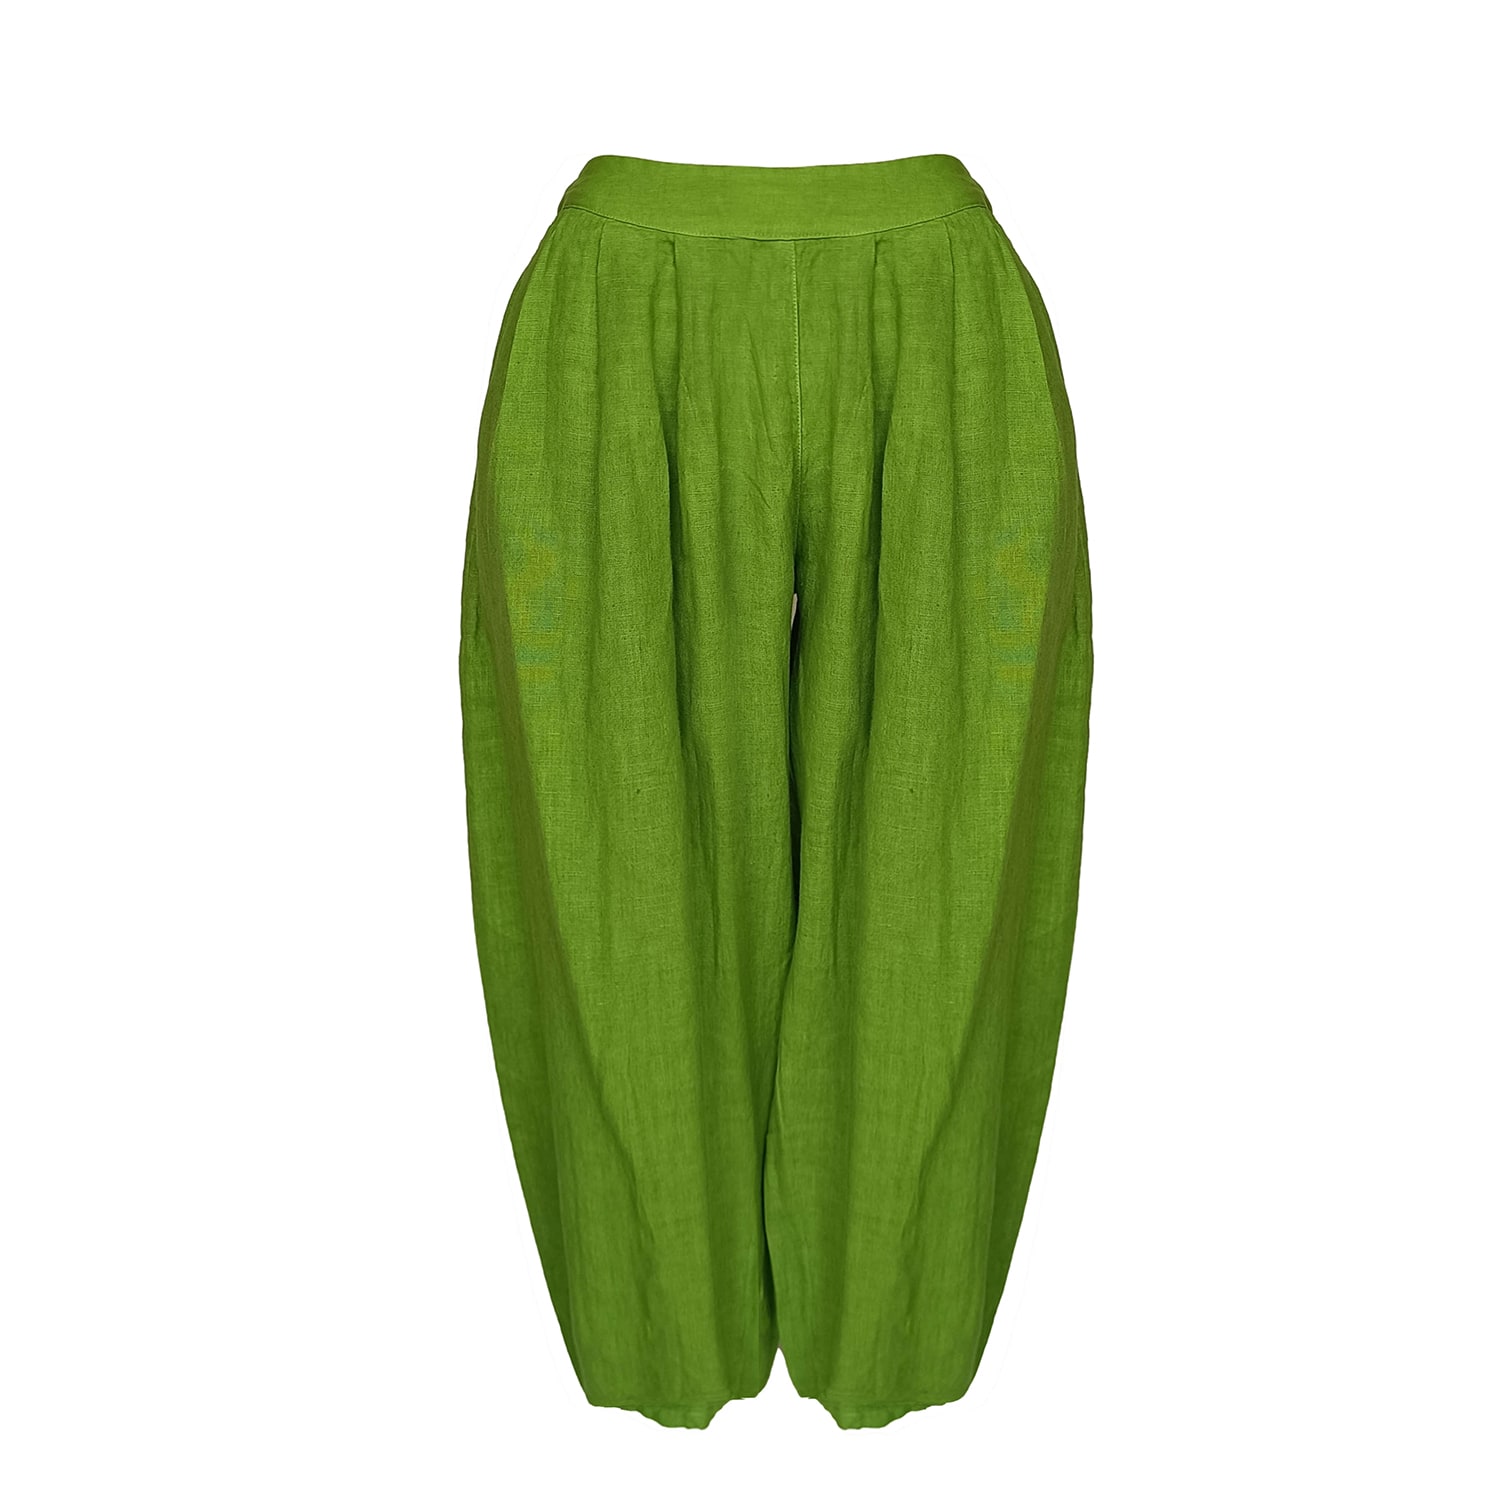 Haris Cotton Women's Green Linen Balloon Pants